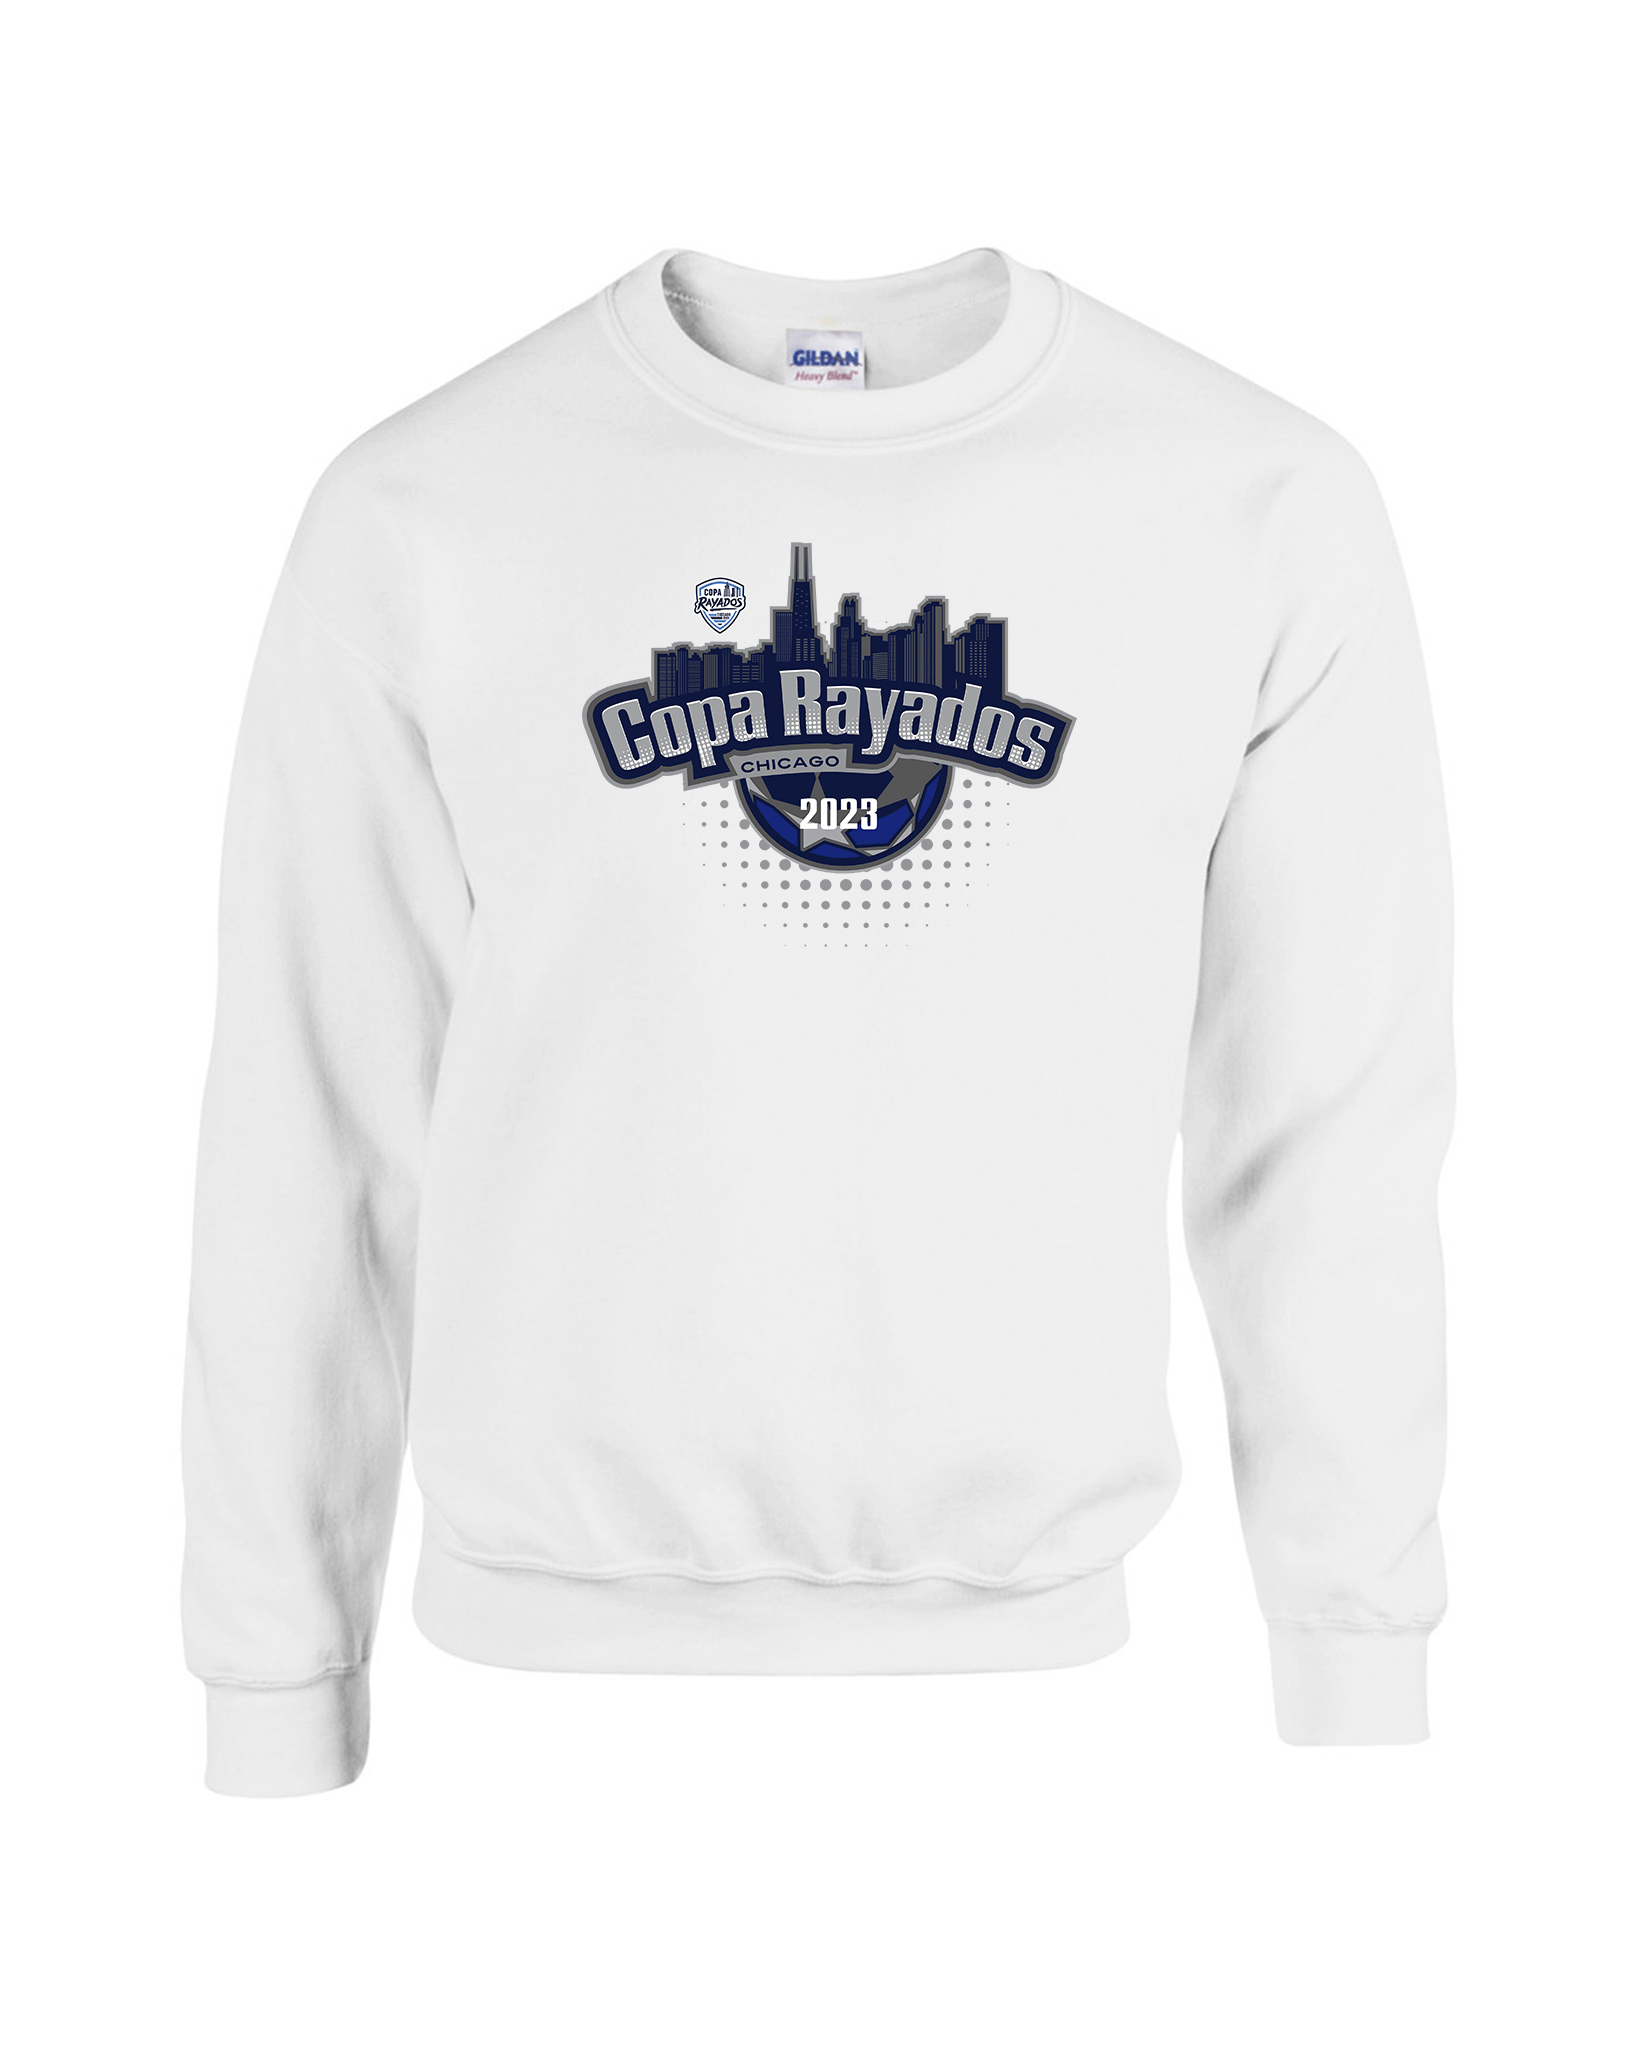 Crew Sweatershirt- 2023 Copa Rayados Chicago